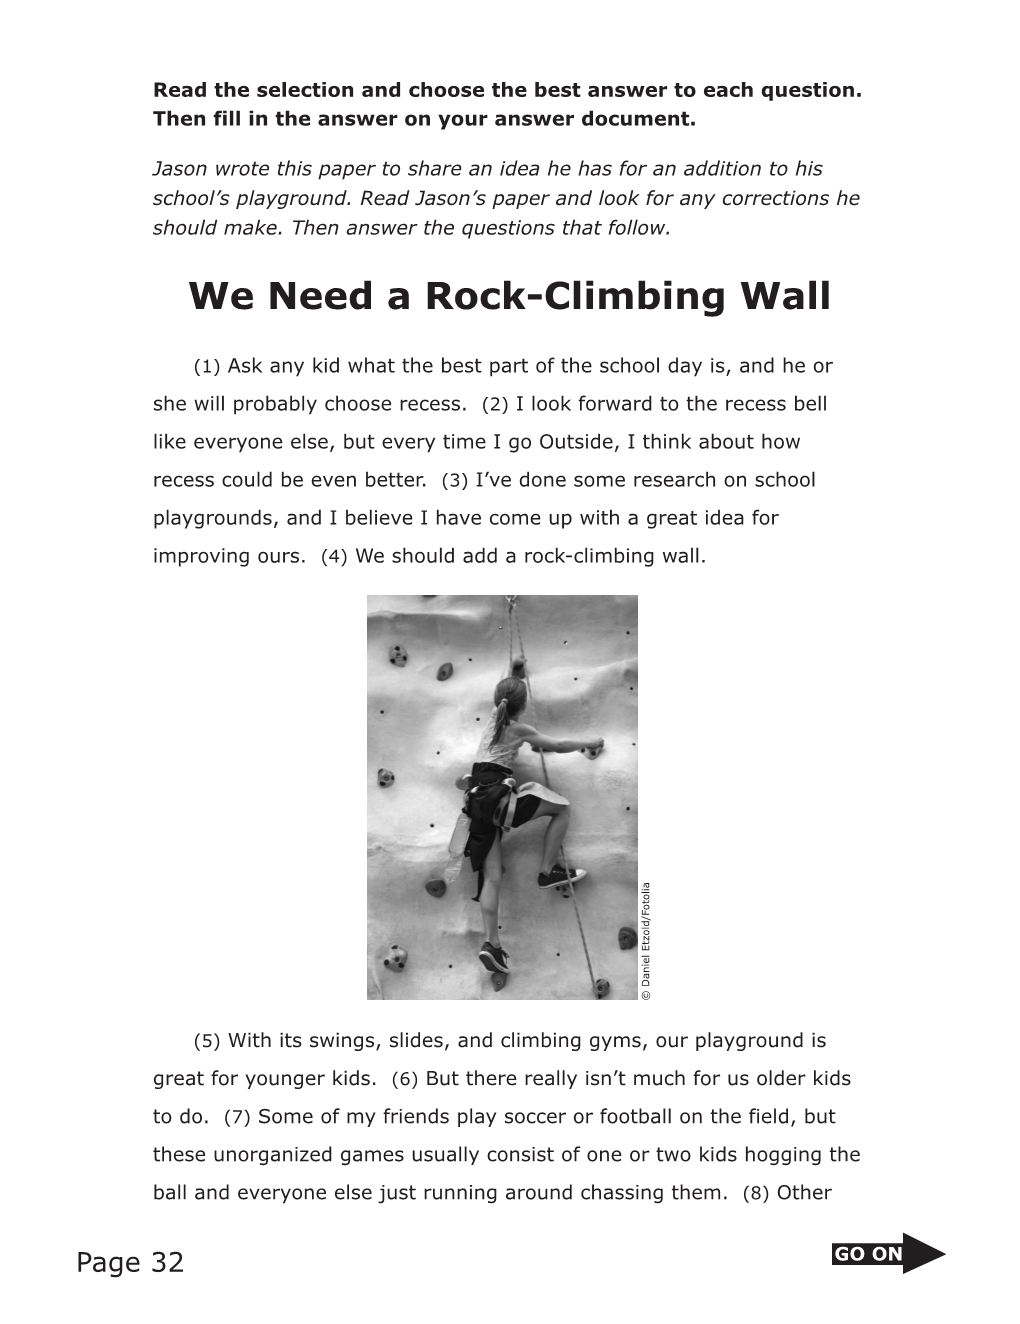 We Need a Rock-Climbing Wall